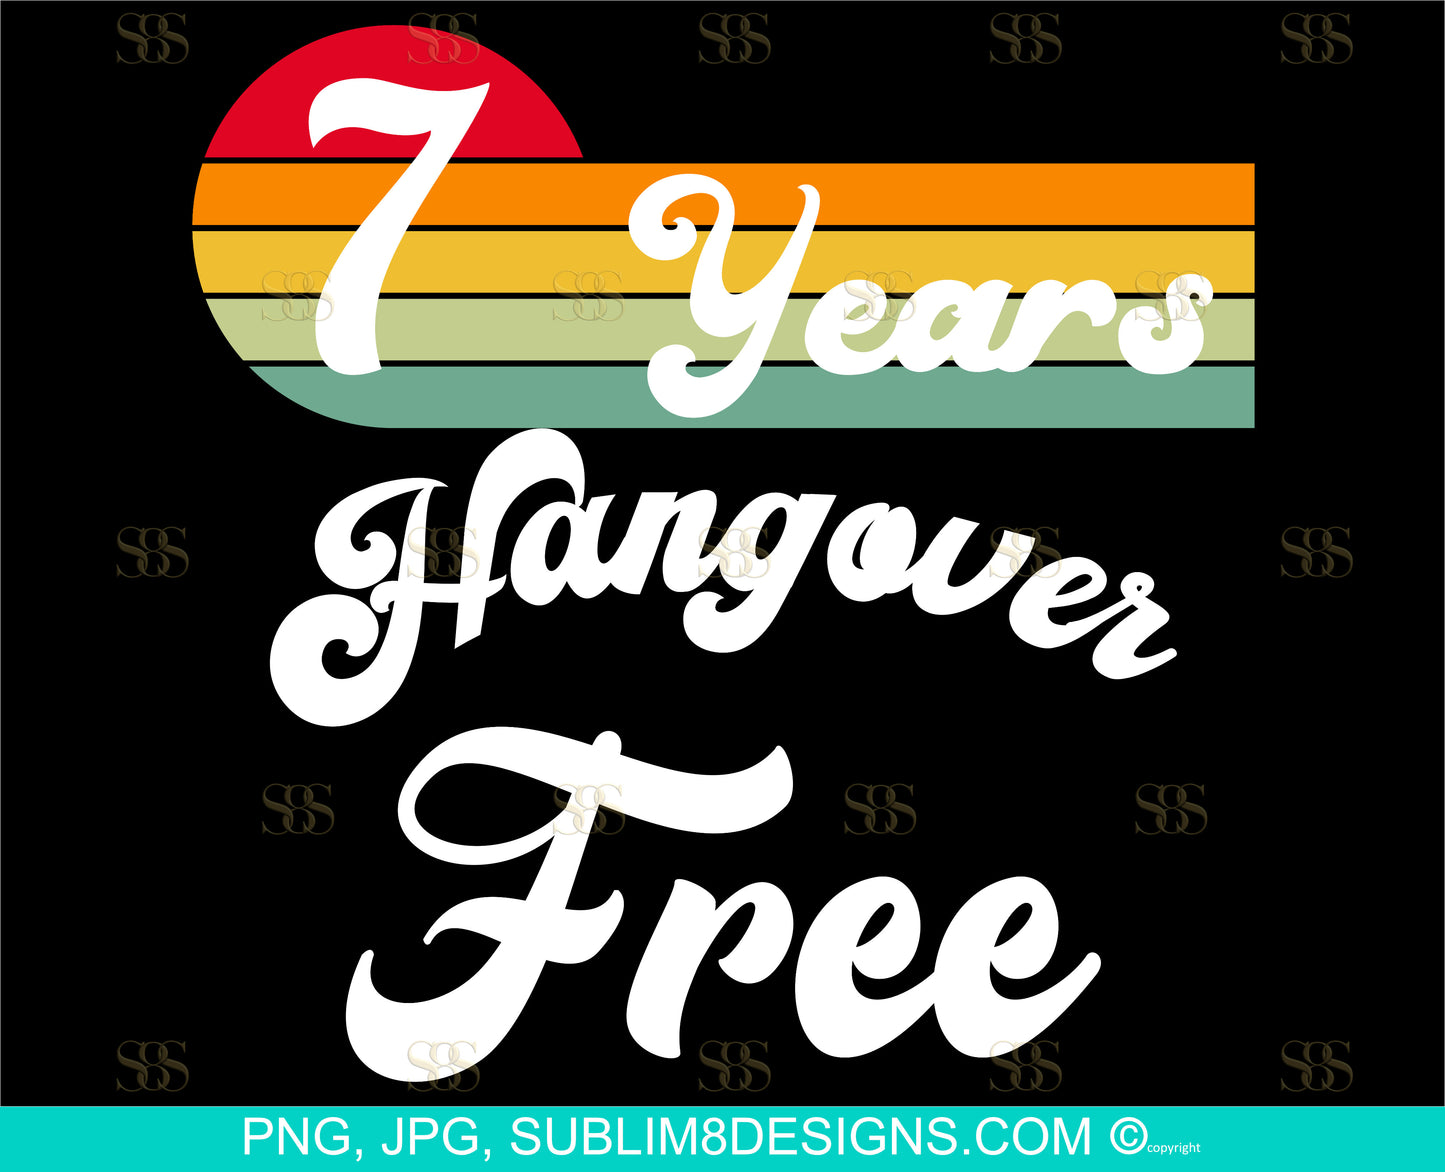 7 Years Hangover Free